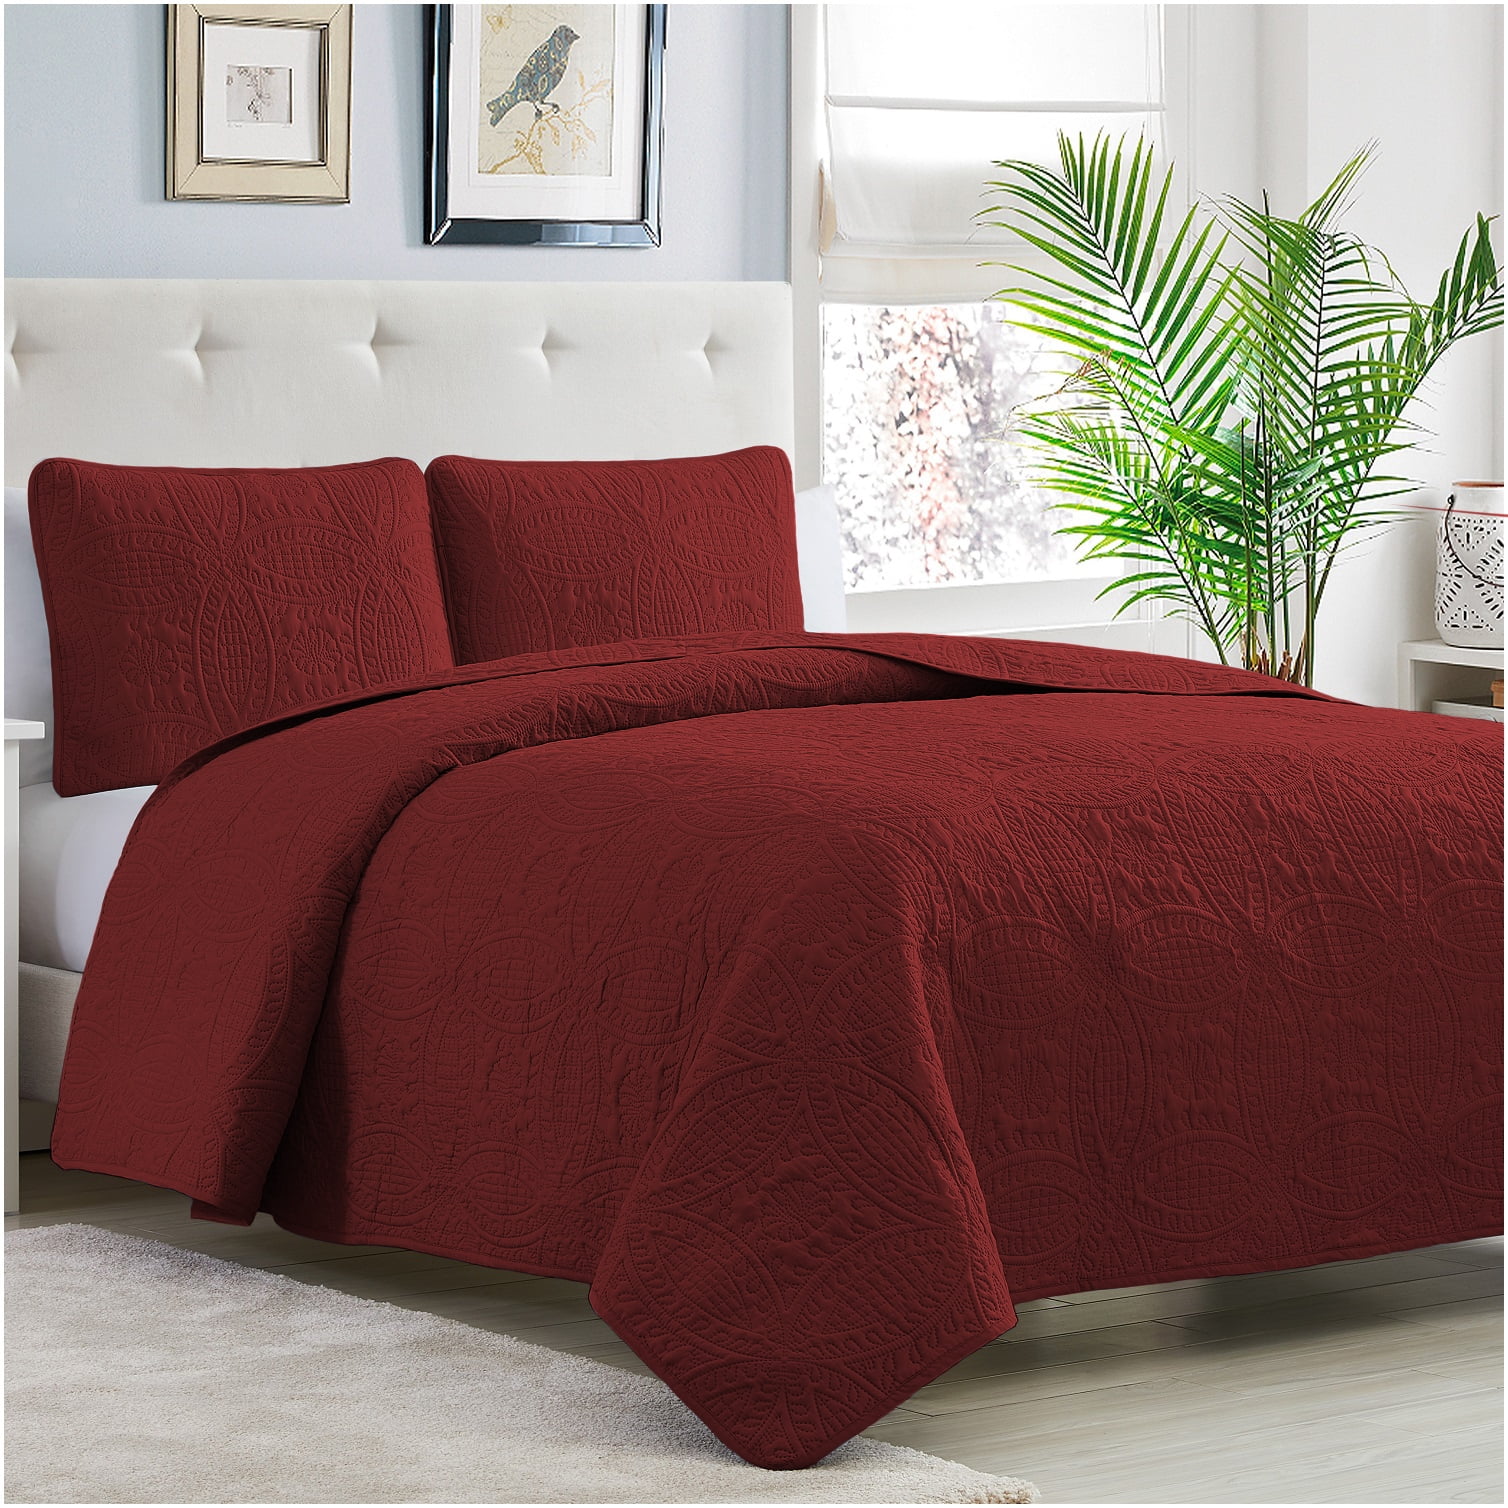 Details about   3pcs Cotton Reversible Quilt Set Summer Comforter Bedspread Coverlet Bed Cover 